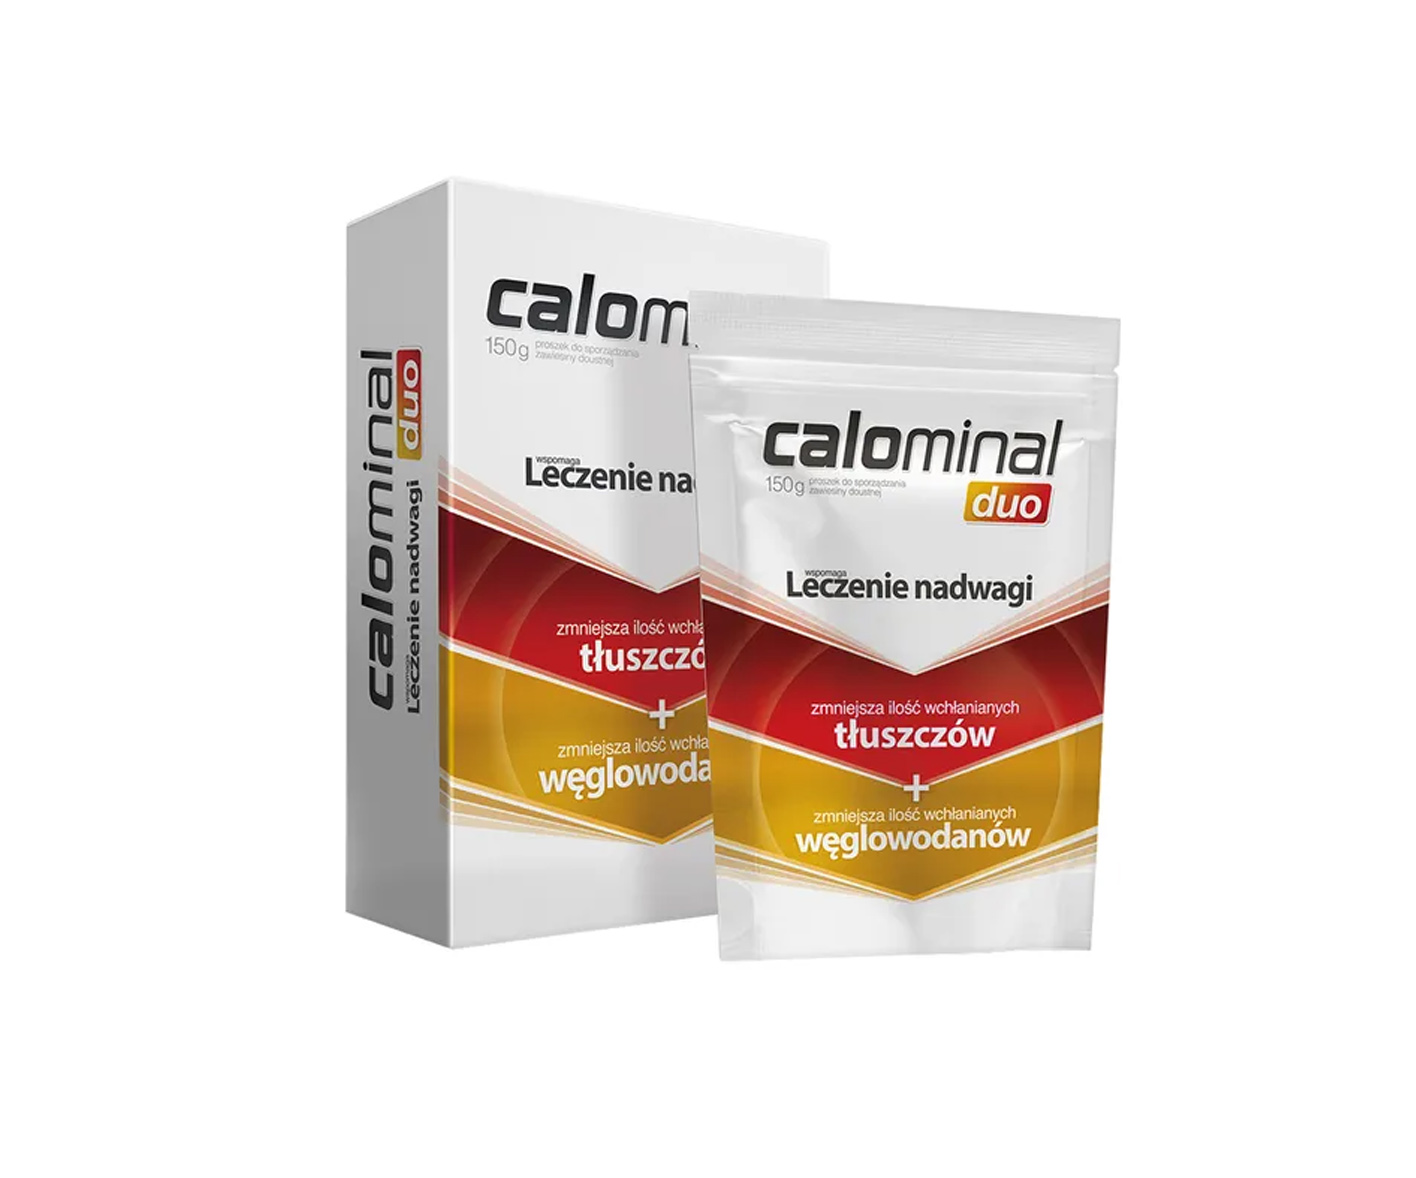  Alfofarm, Calominal Duo, suplement na odchudzanie